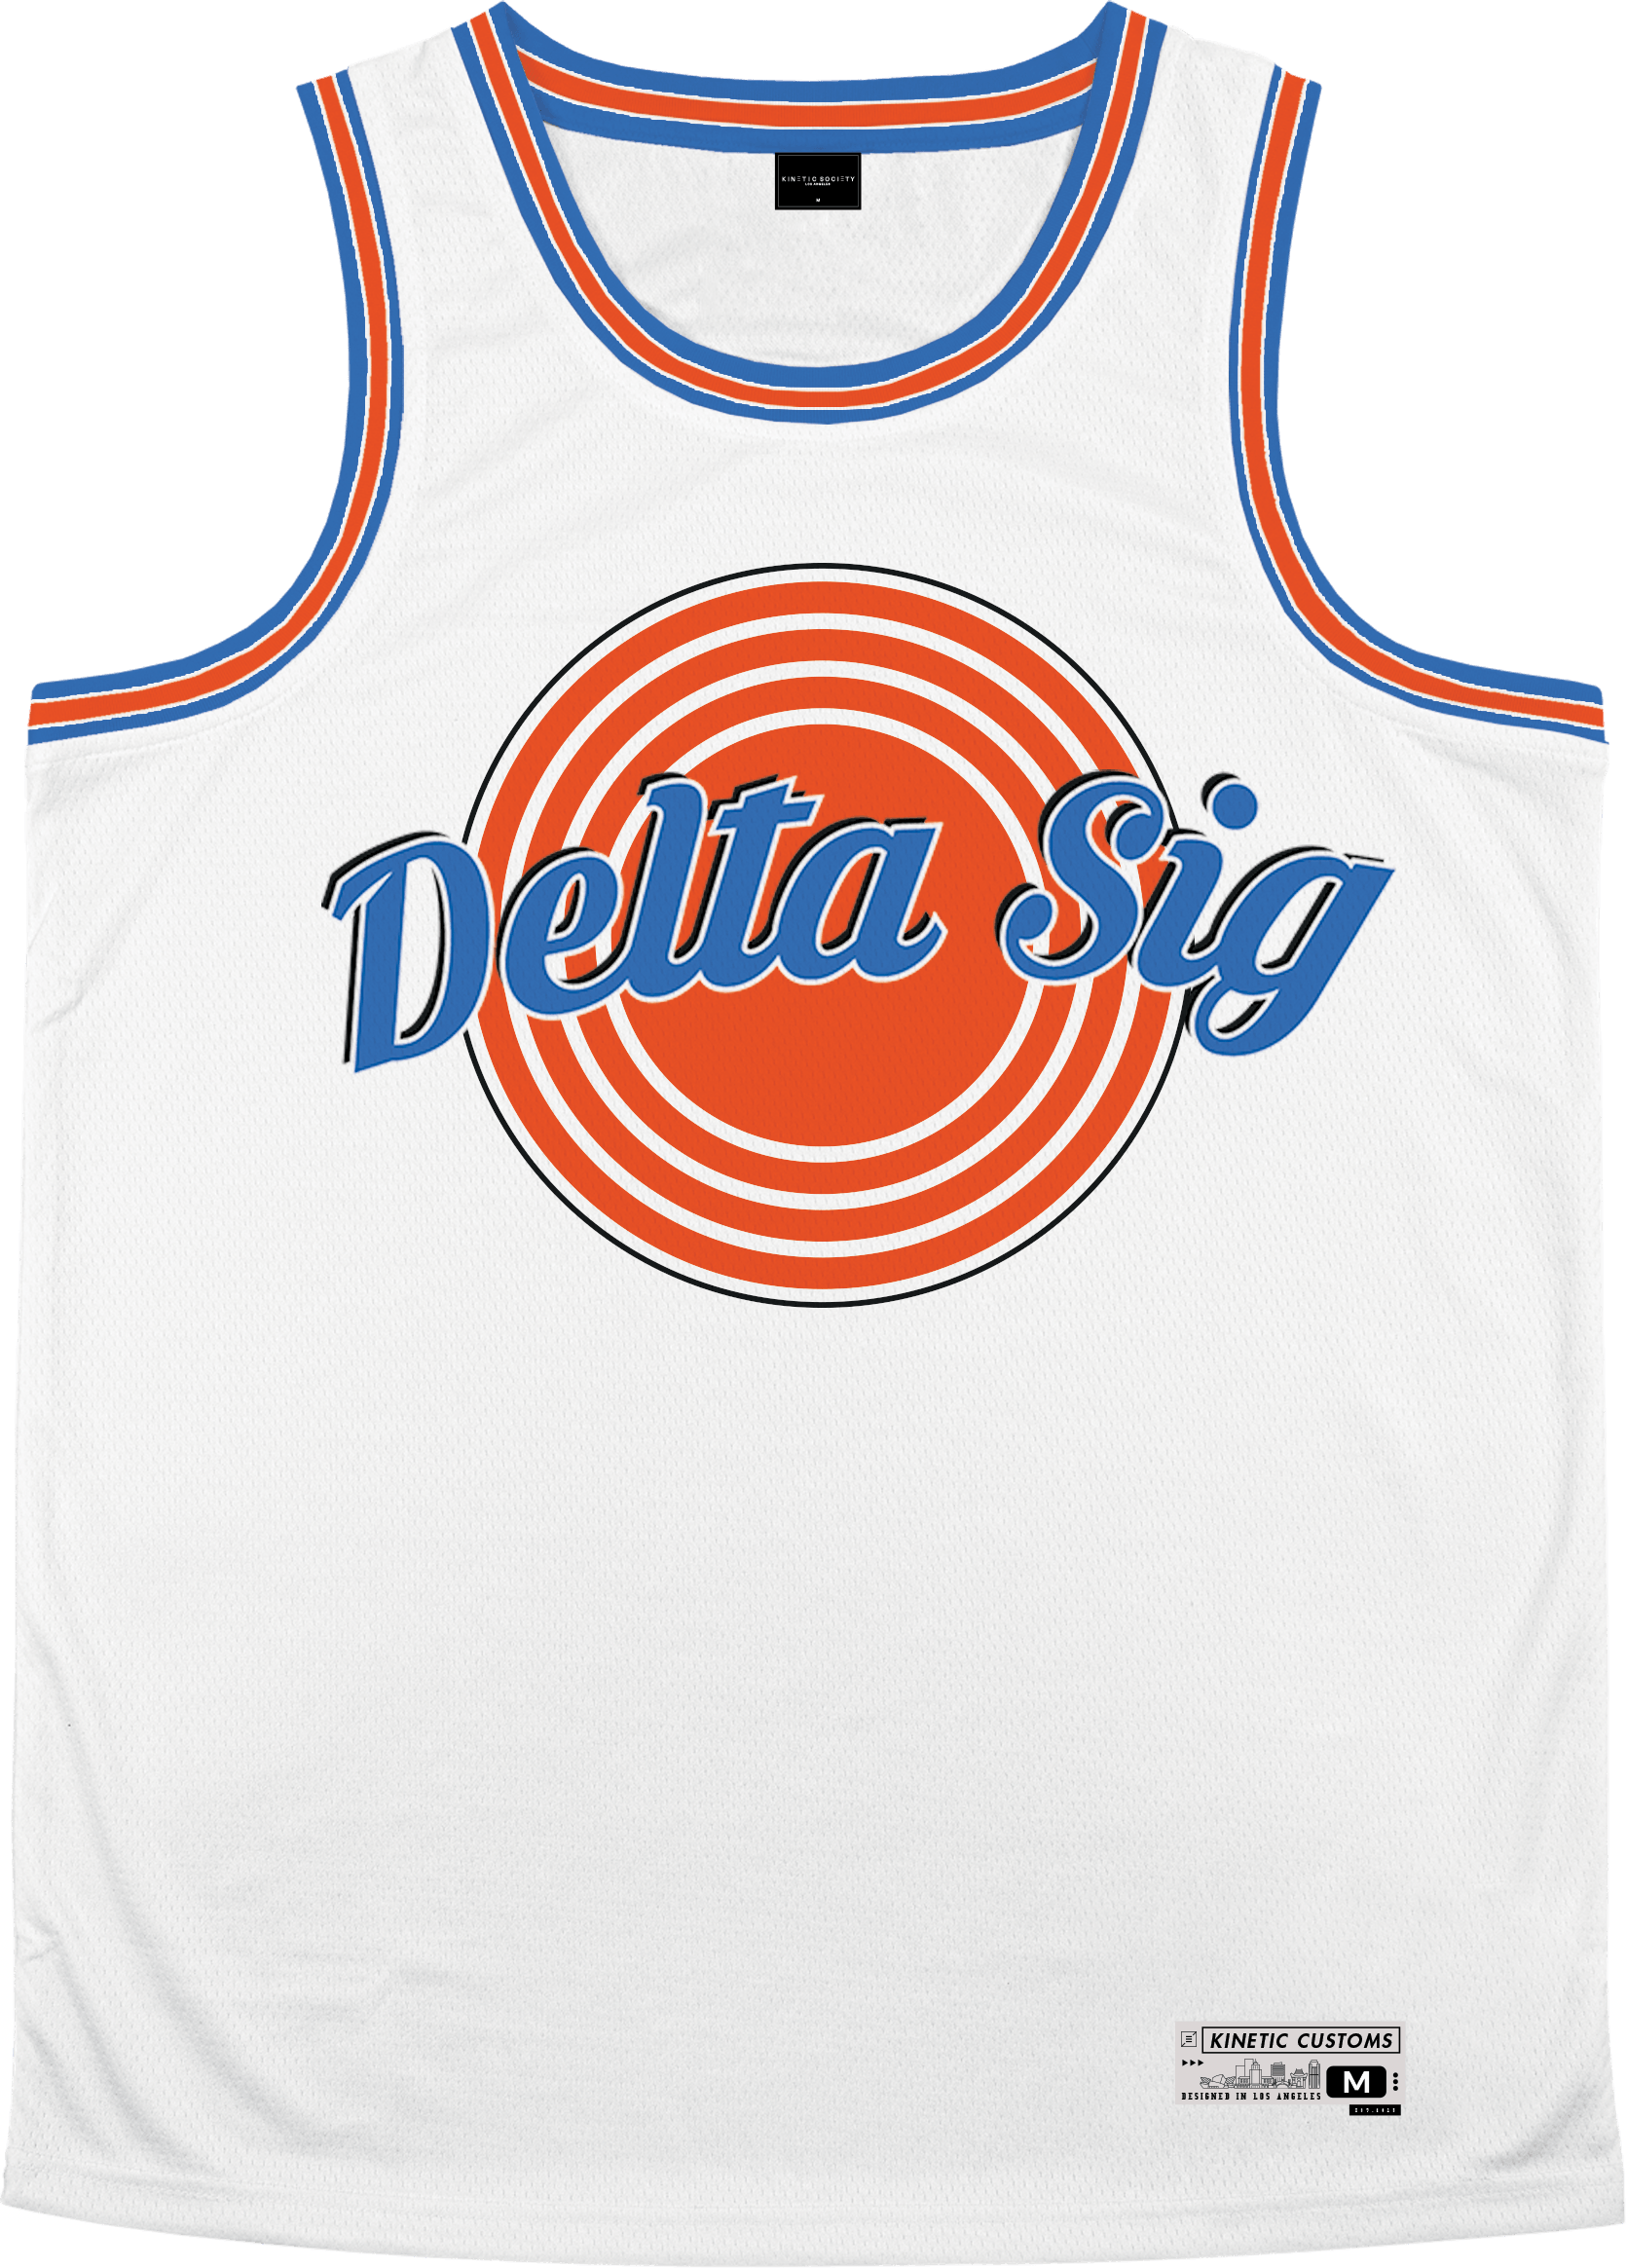 Delta Sigma Phi - Vintage Basketball Jersey - Kinetic Society